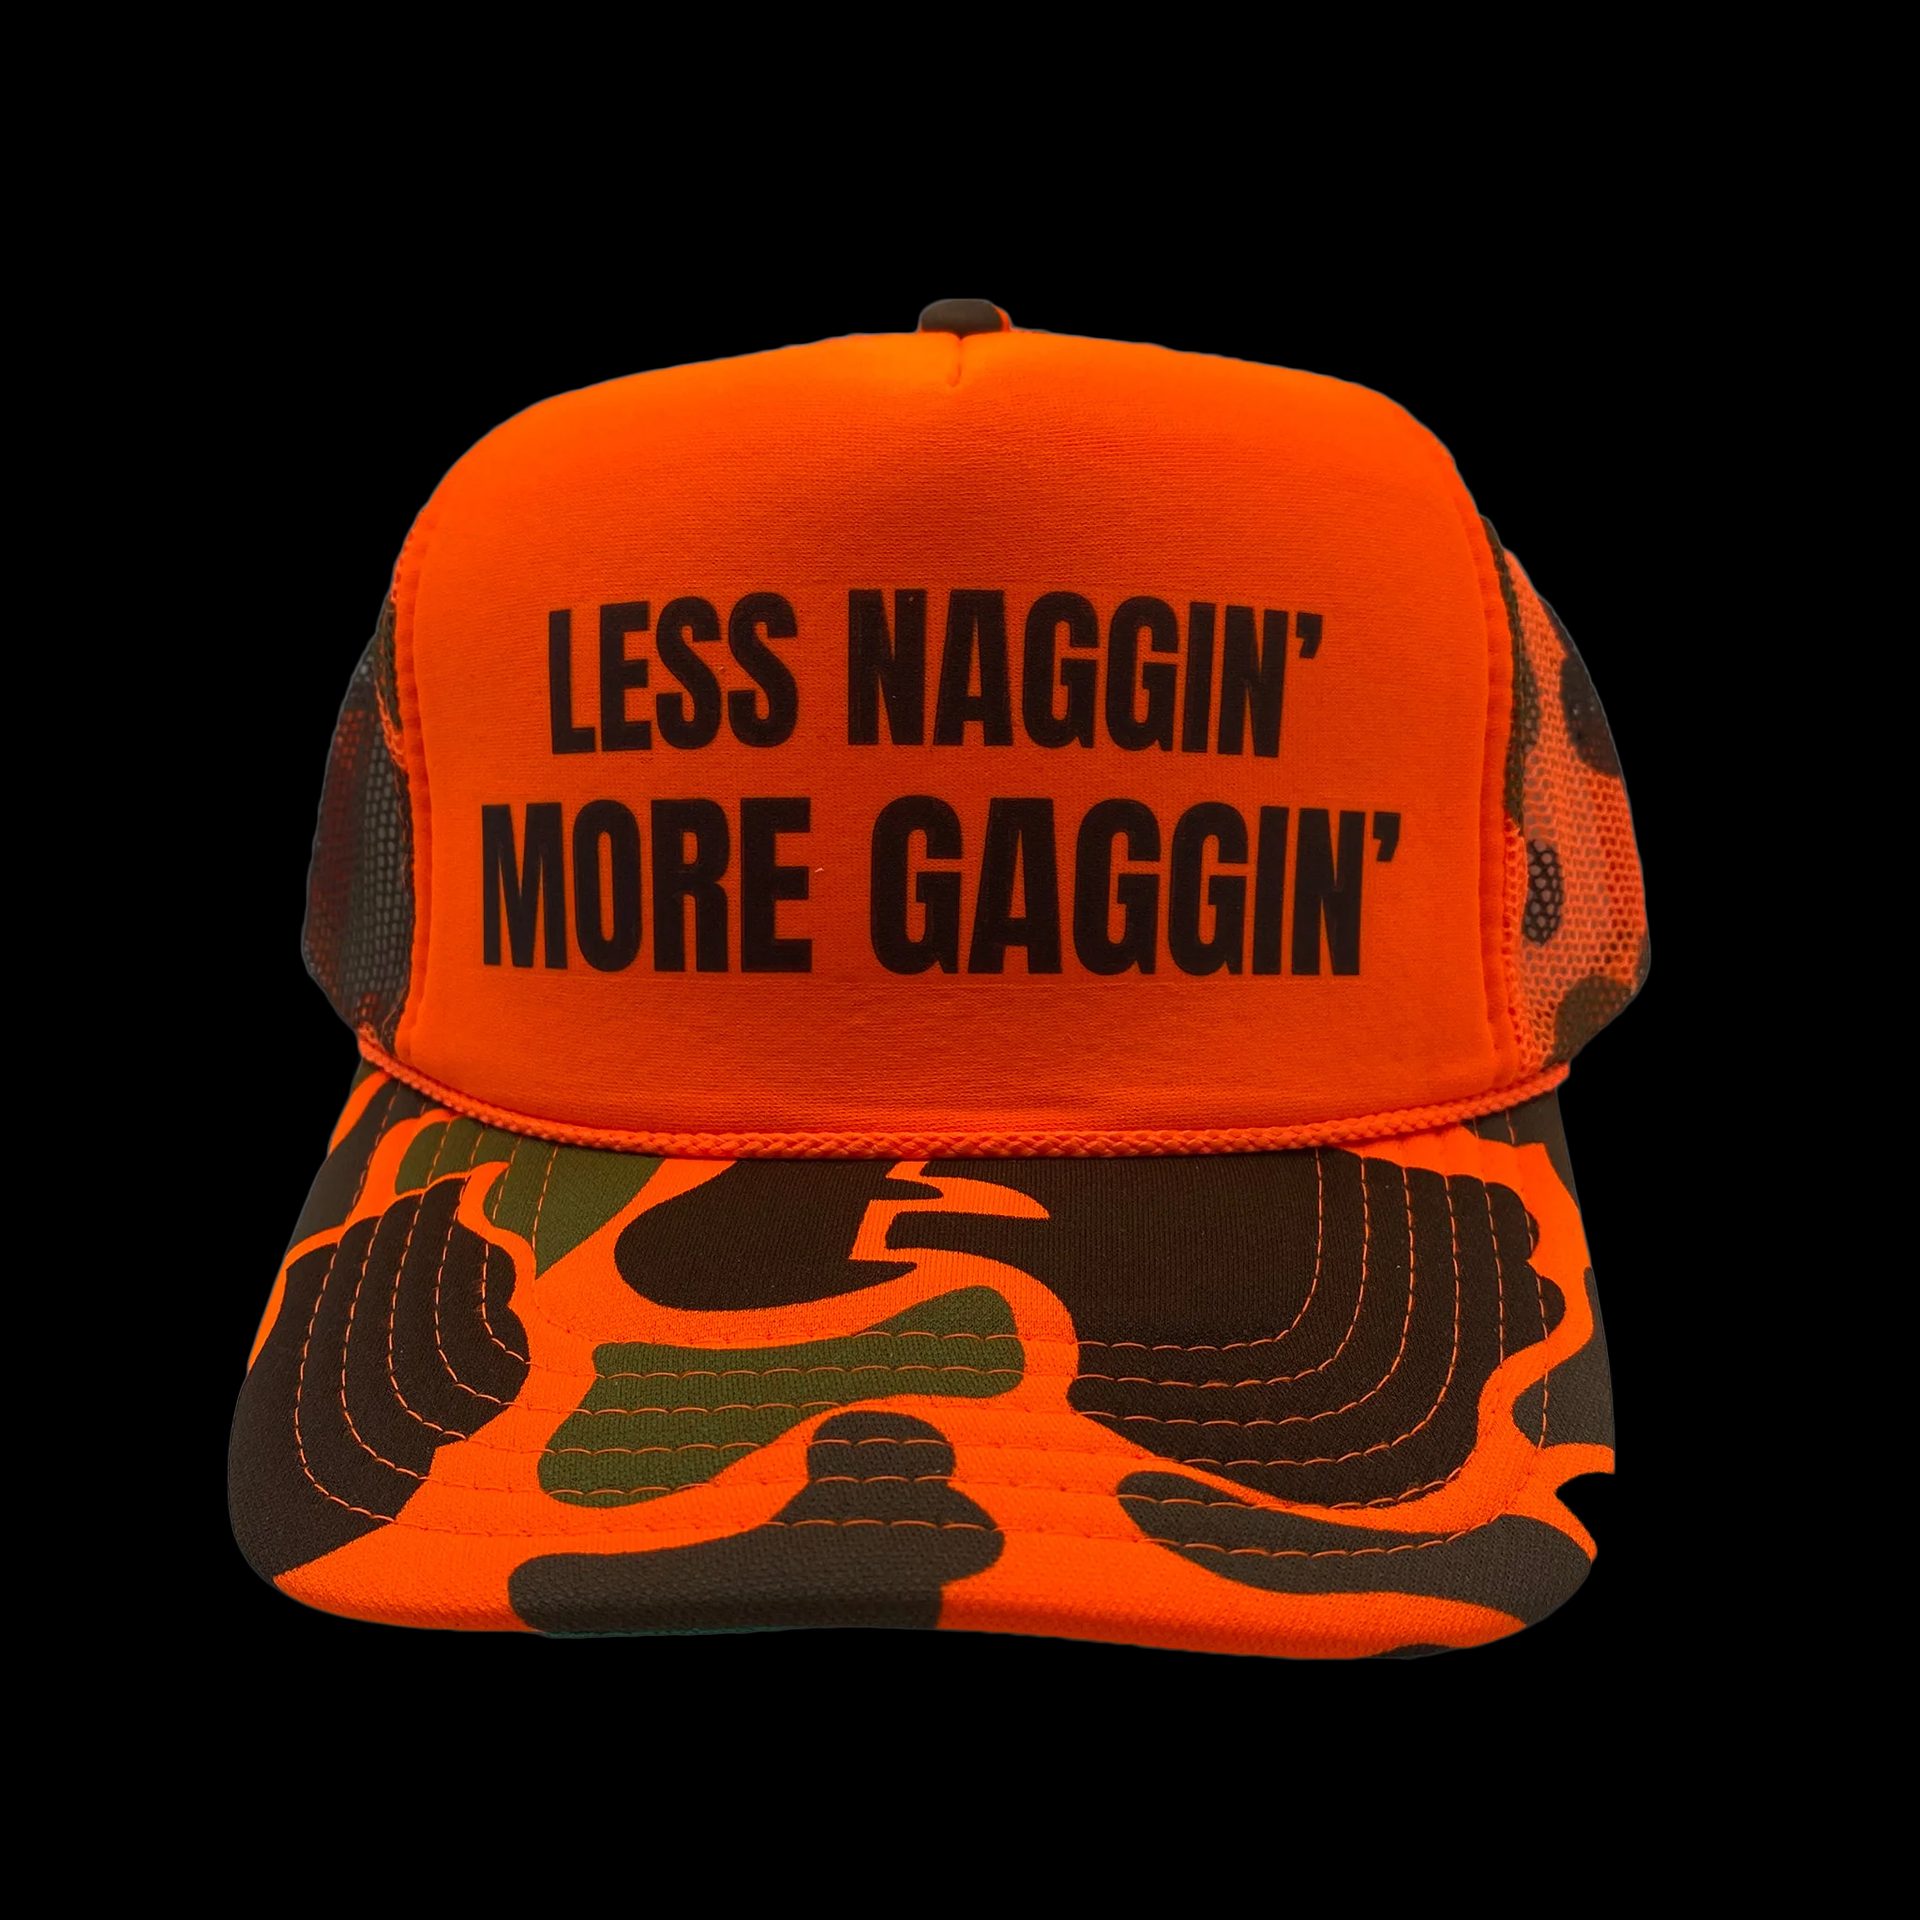 Less Naggin' More Gaggin' Trucker Hat